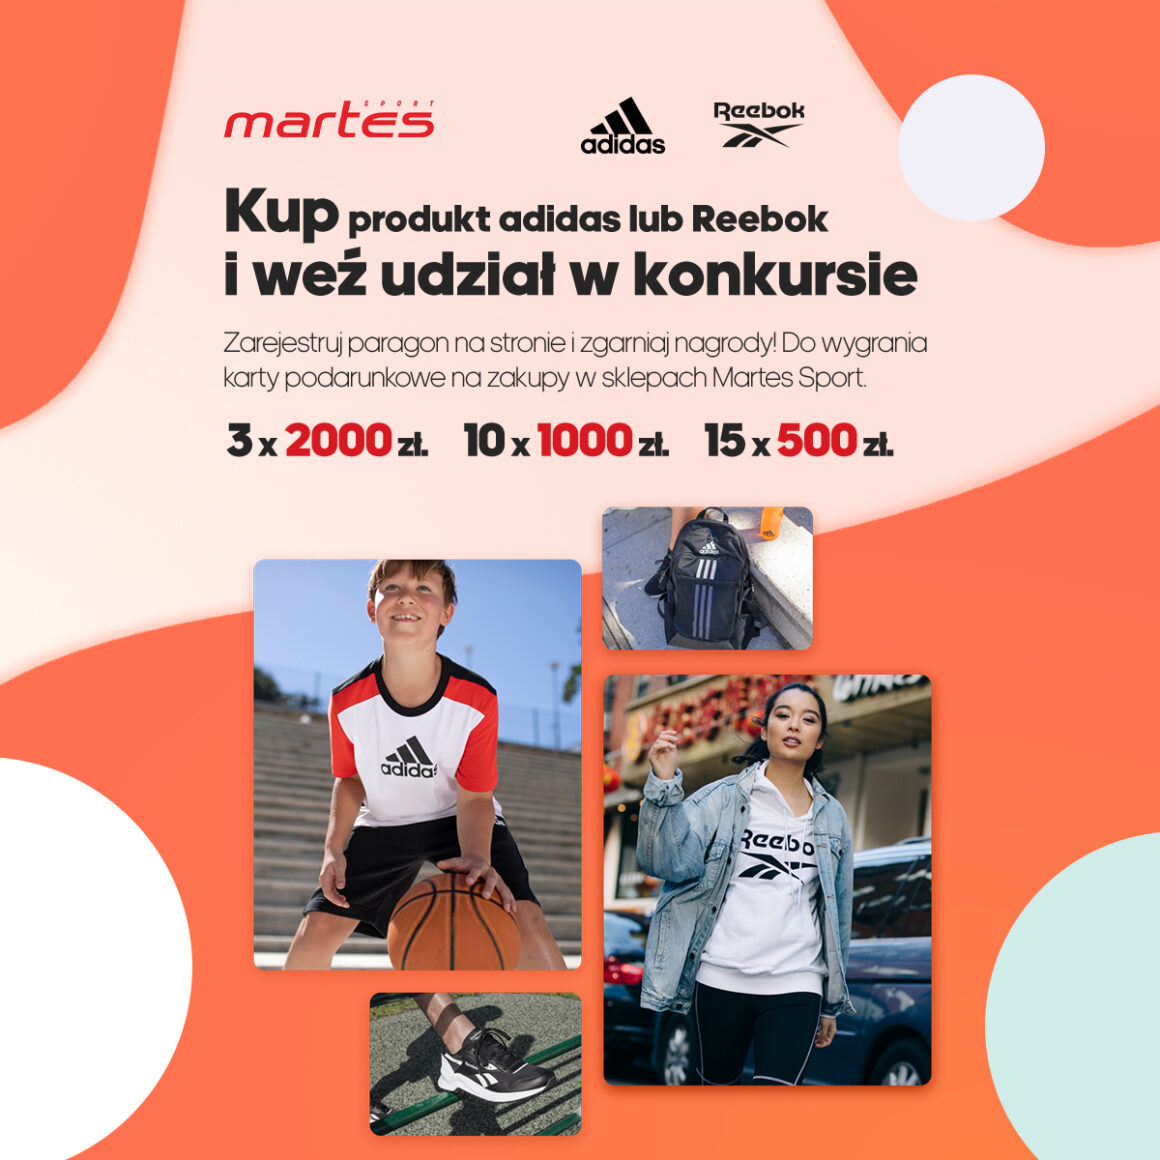 Konkurs adidas/ Reebok w Martes Sport